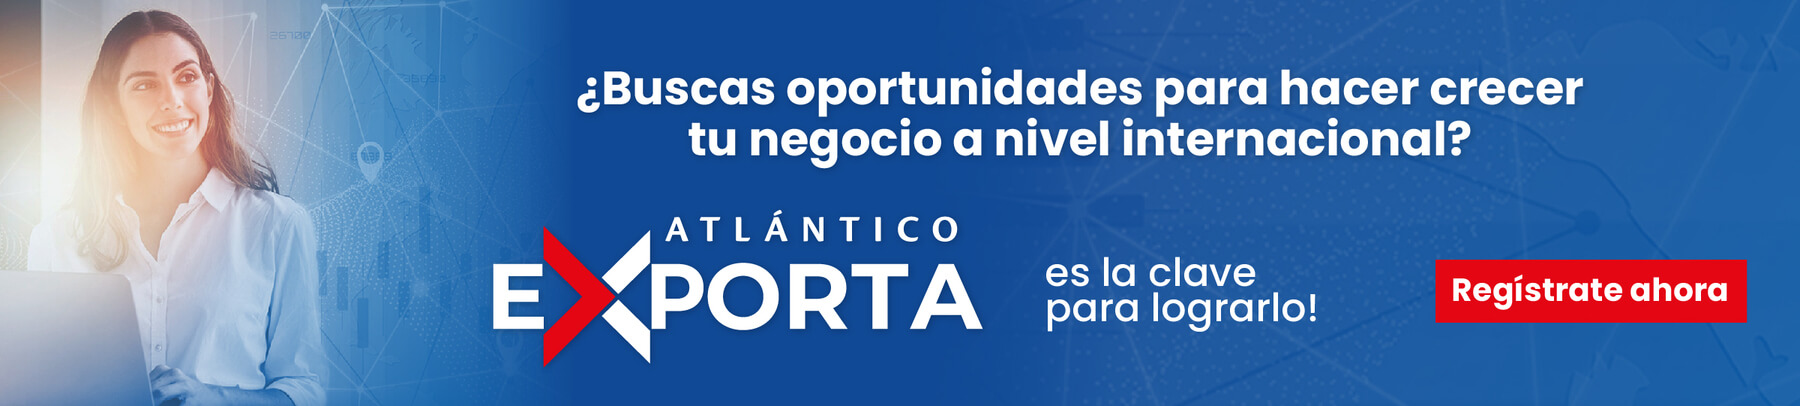 banner atlántico exporta desktop